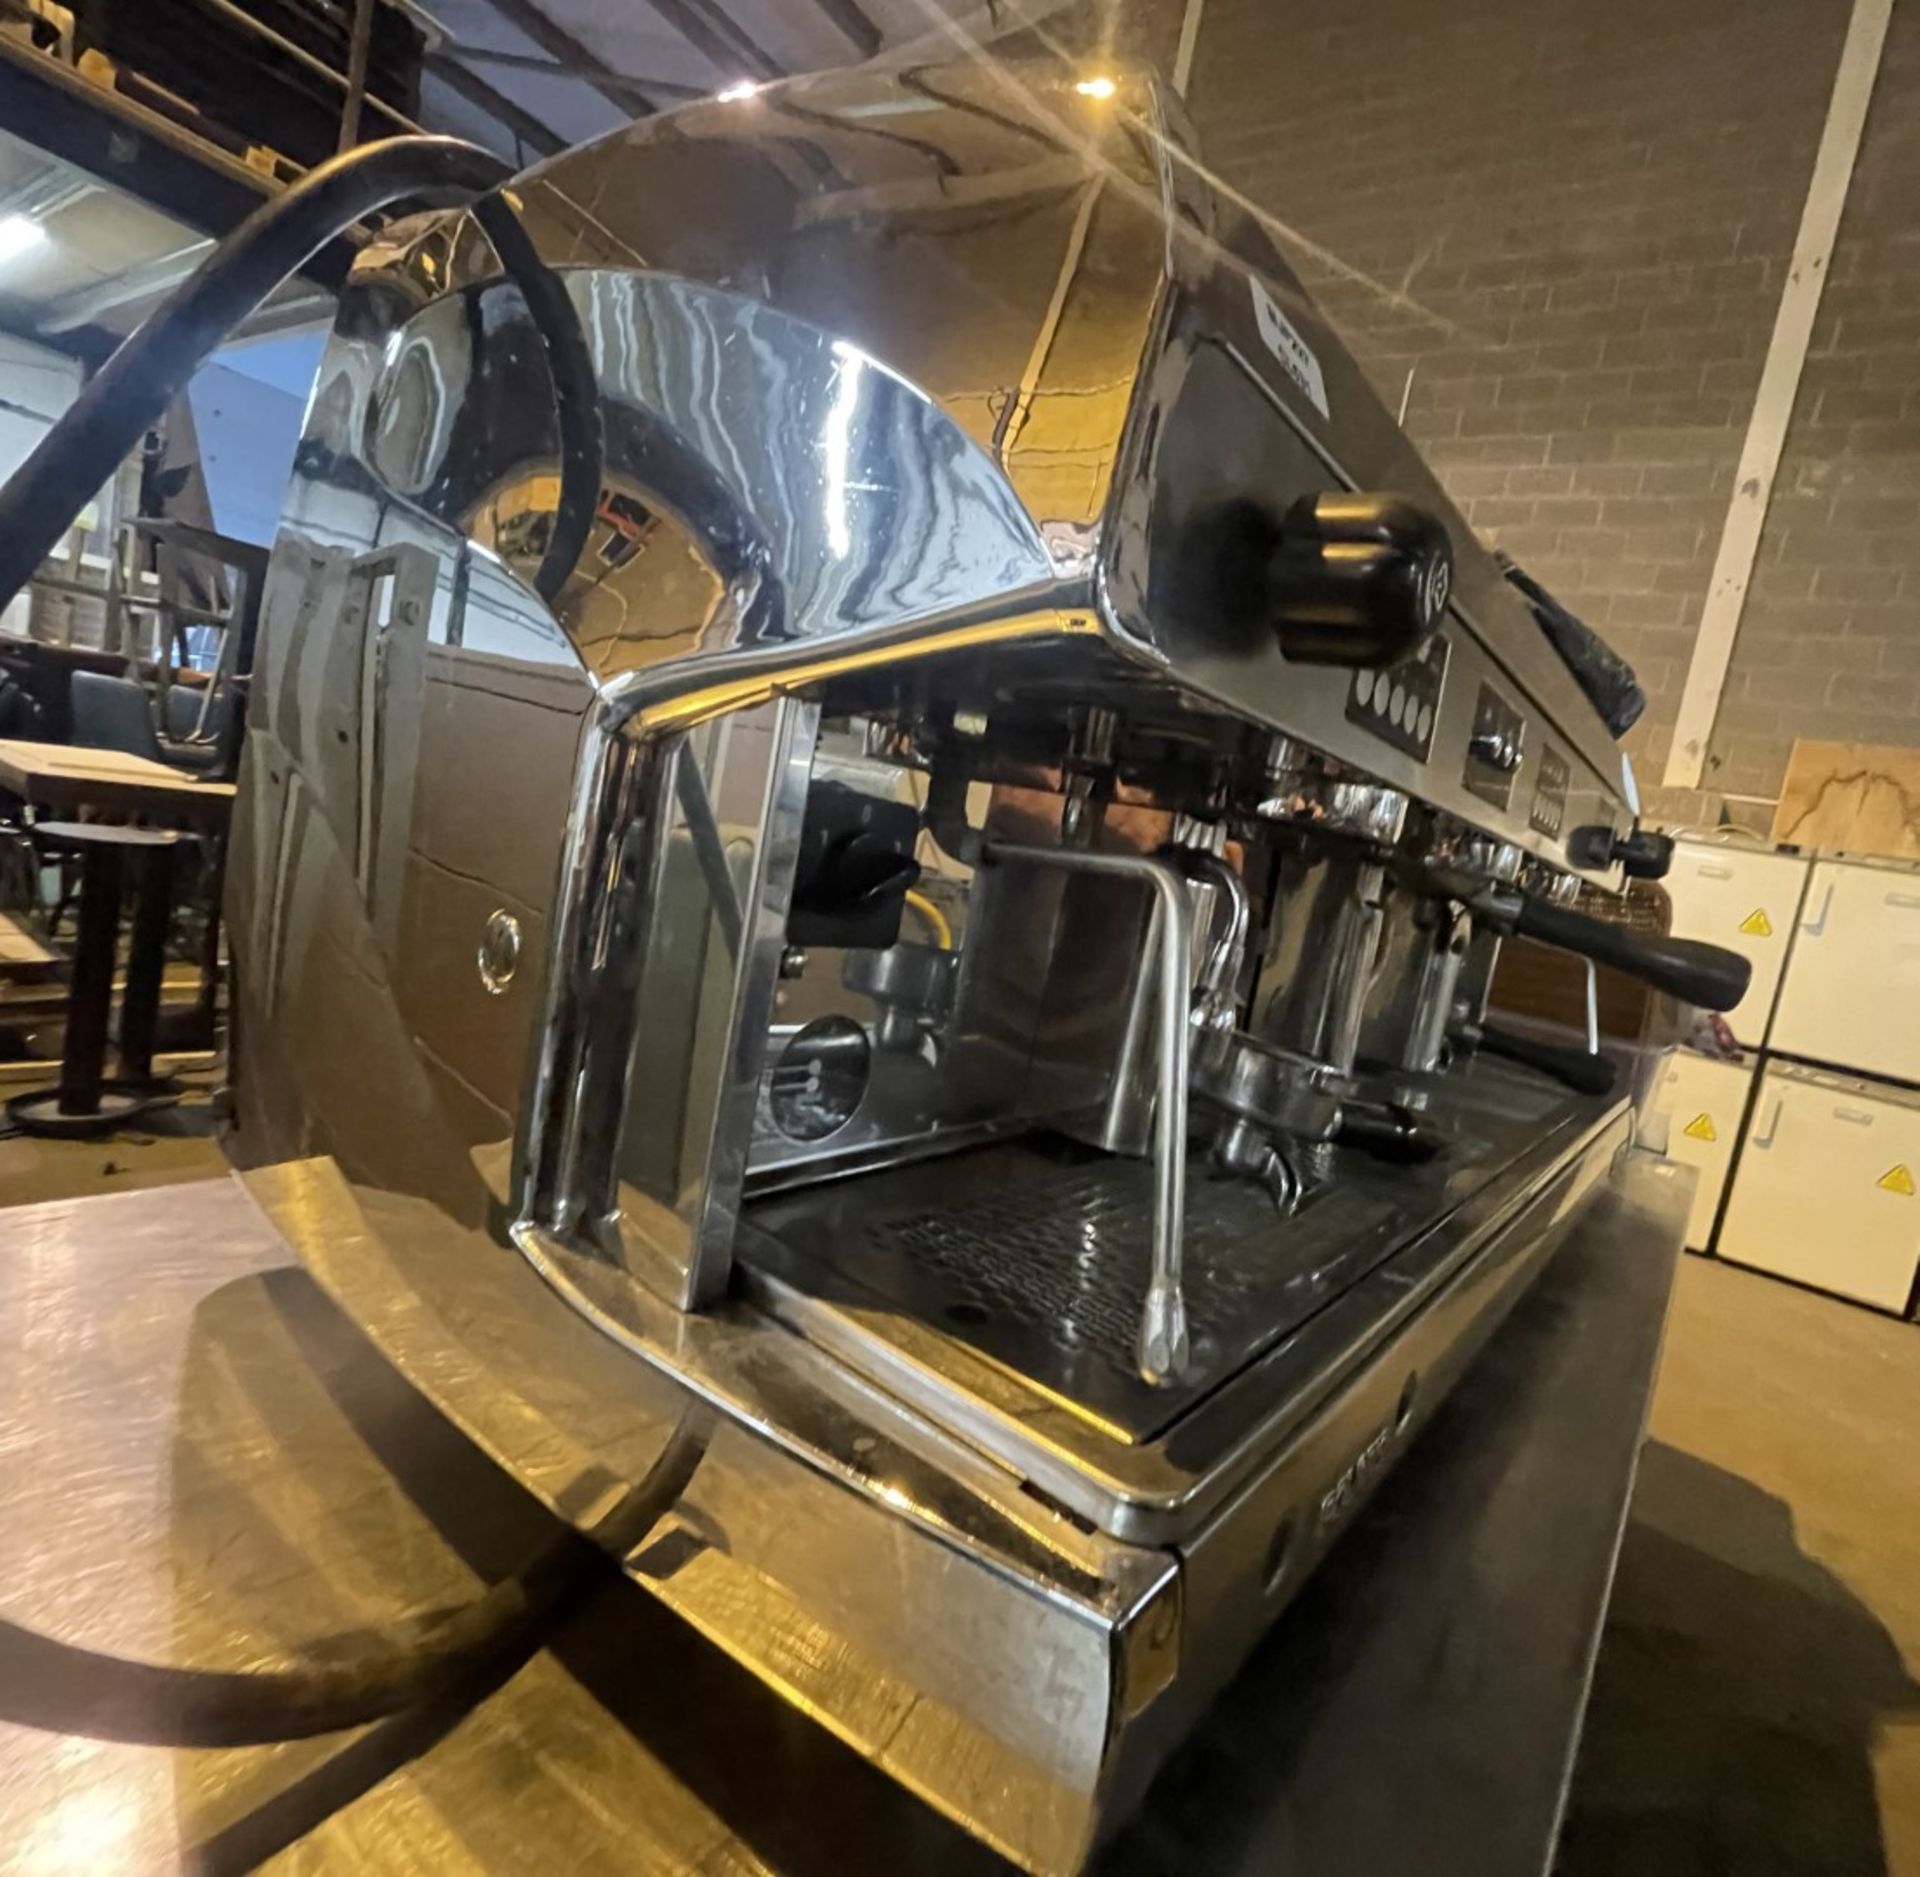 1 x Polaris Wega 3 Group Commercial Espresso Coffee Machine - Stainless Steel Exterior - 3 Phase - Image 14 of 14